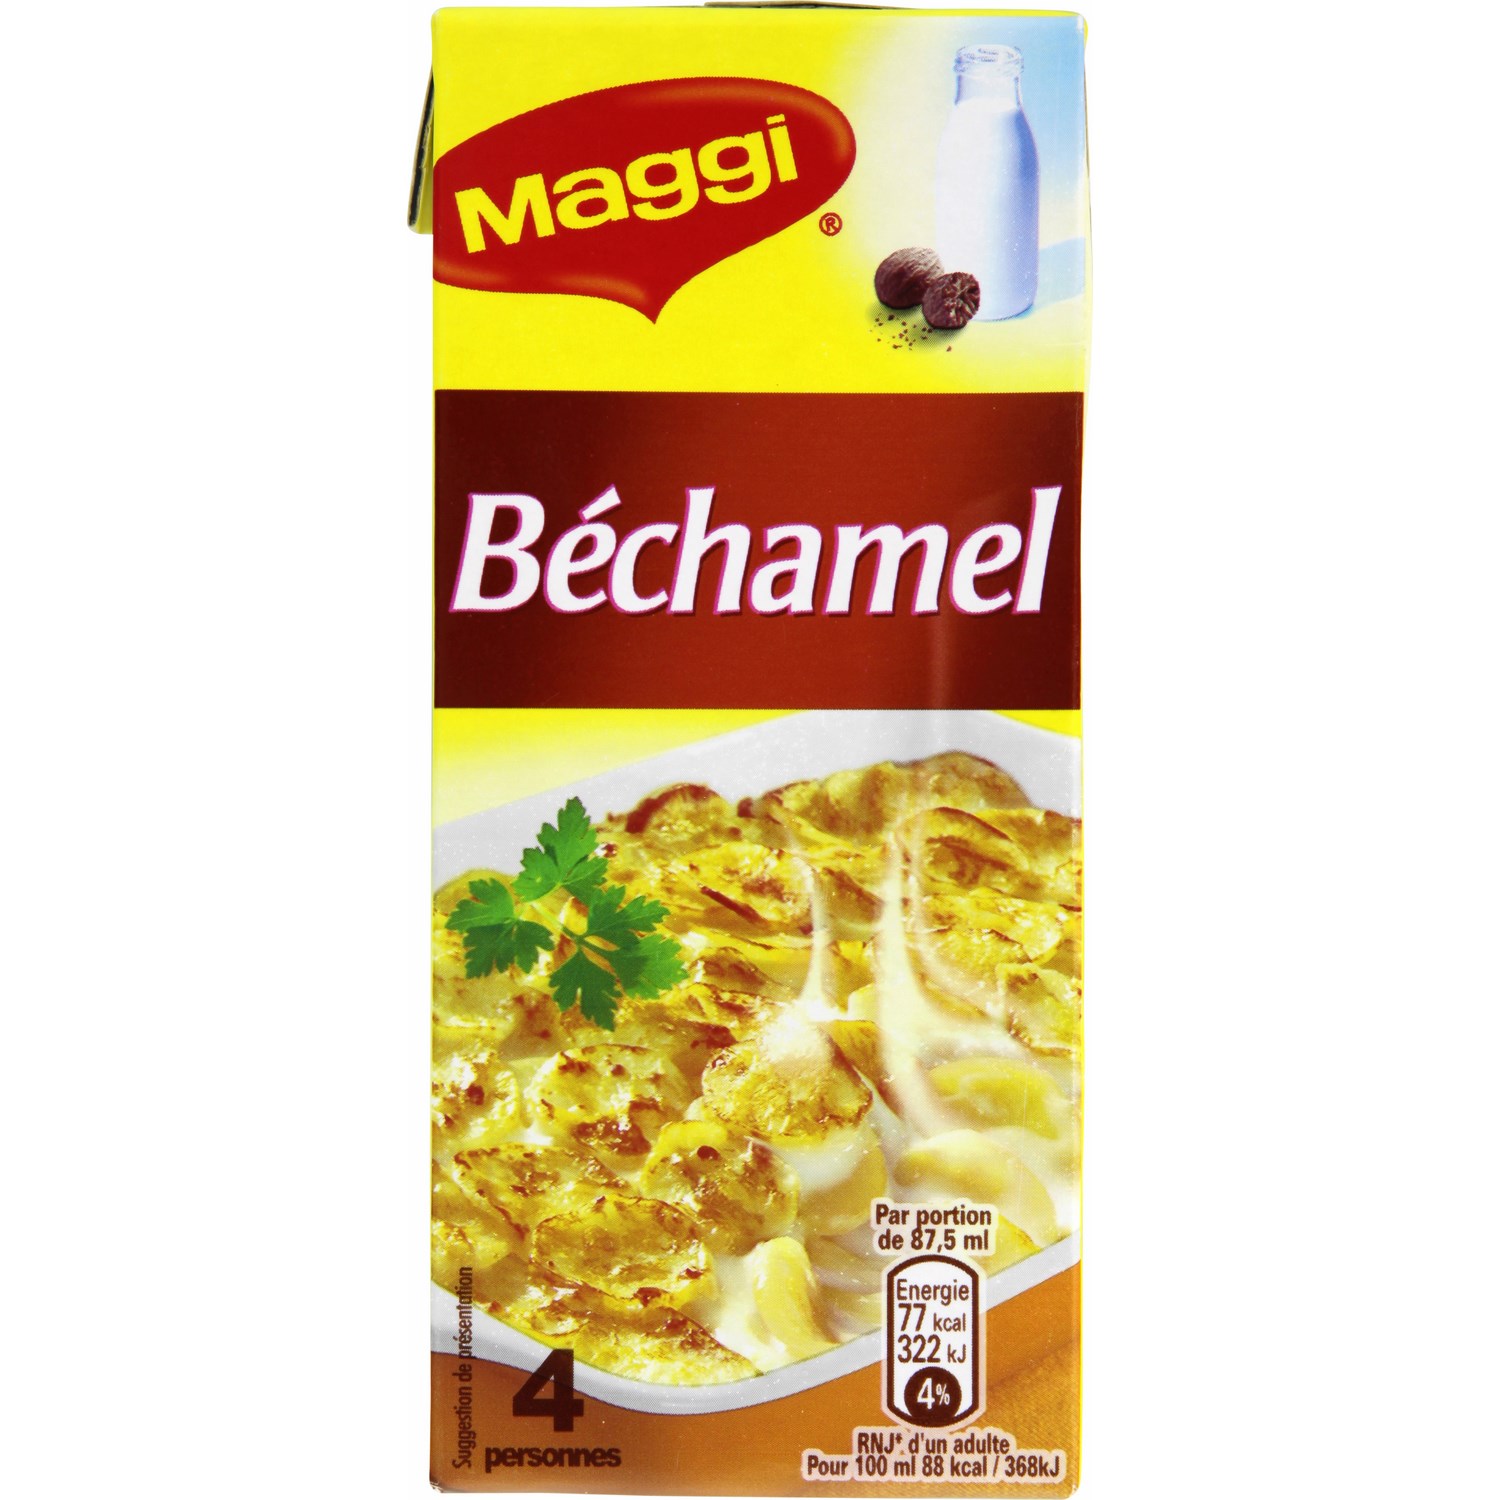 MAGGI Ma Sauce Fine Béchamel 350ml